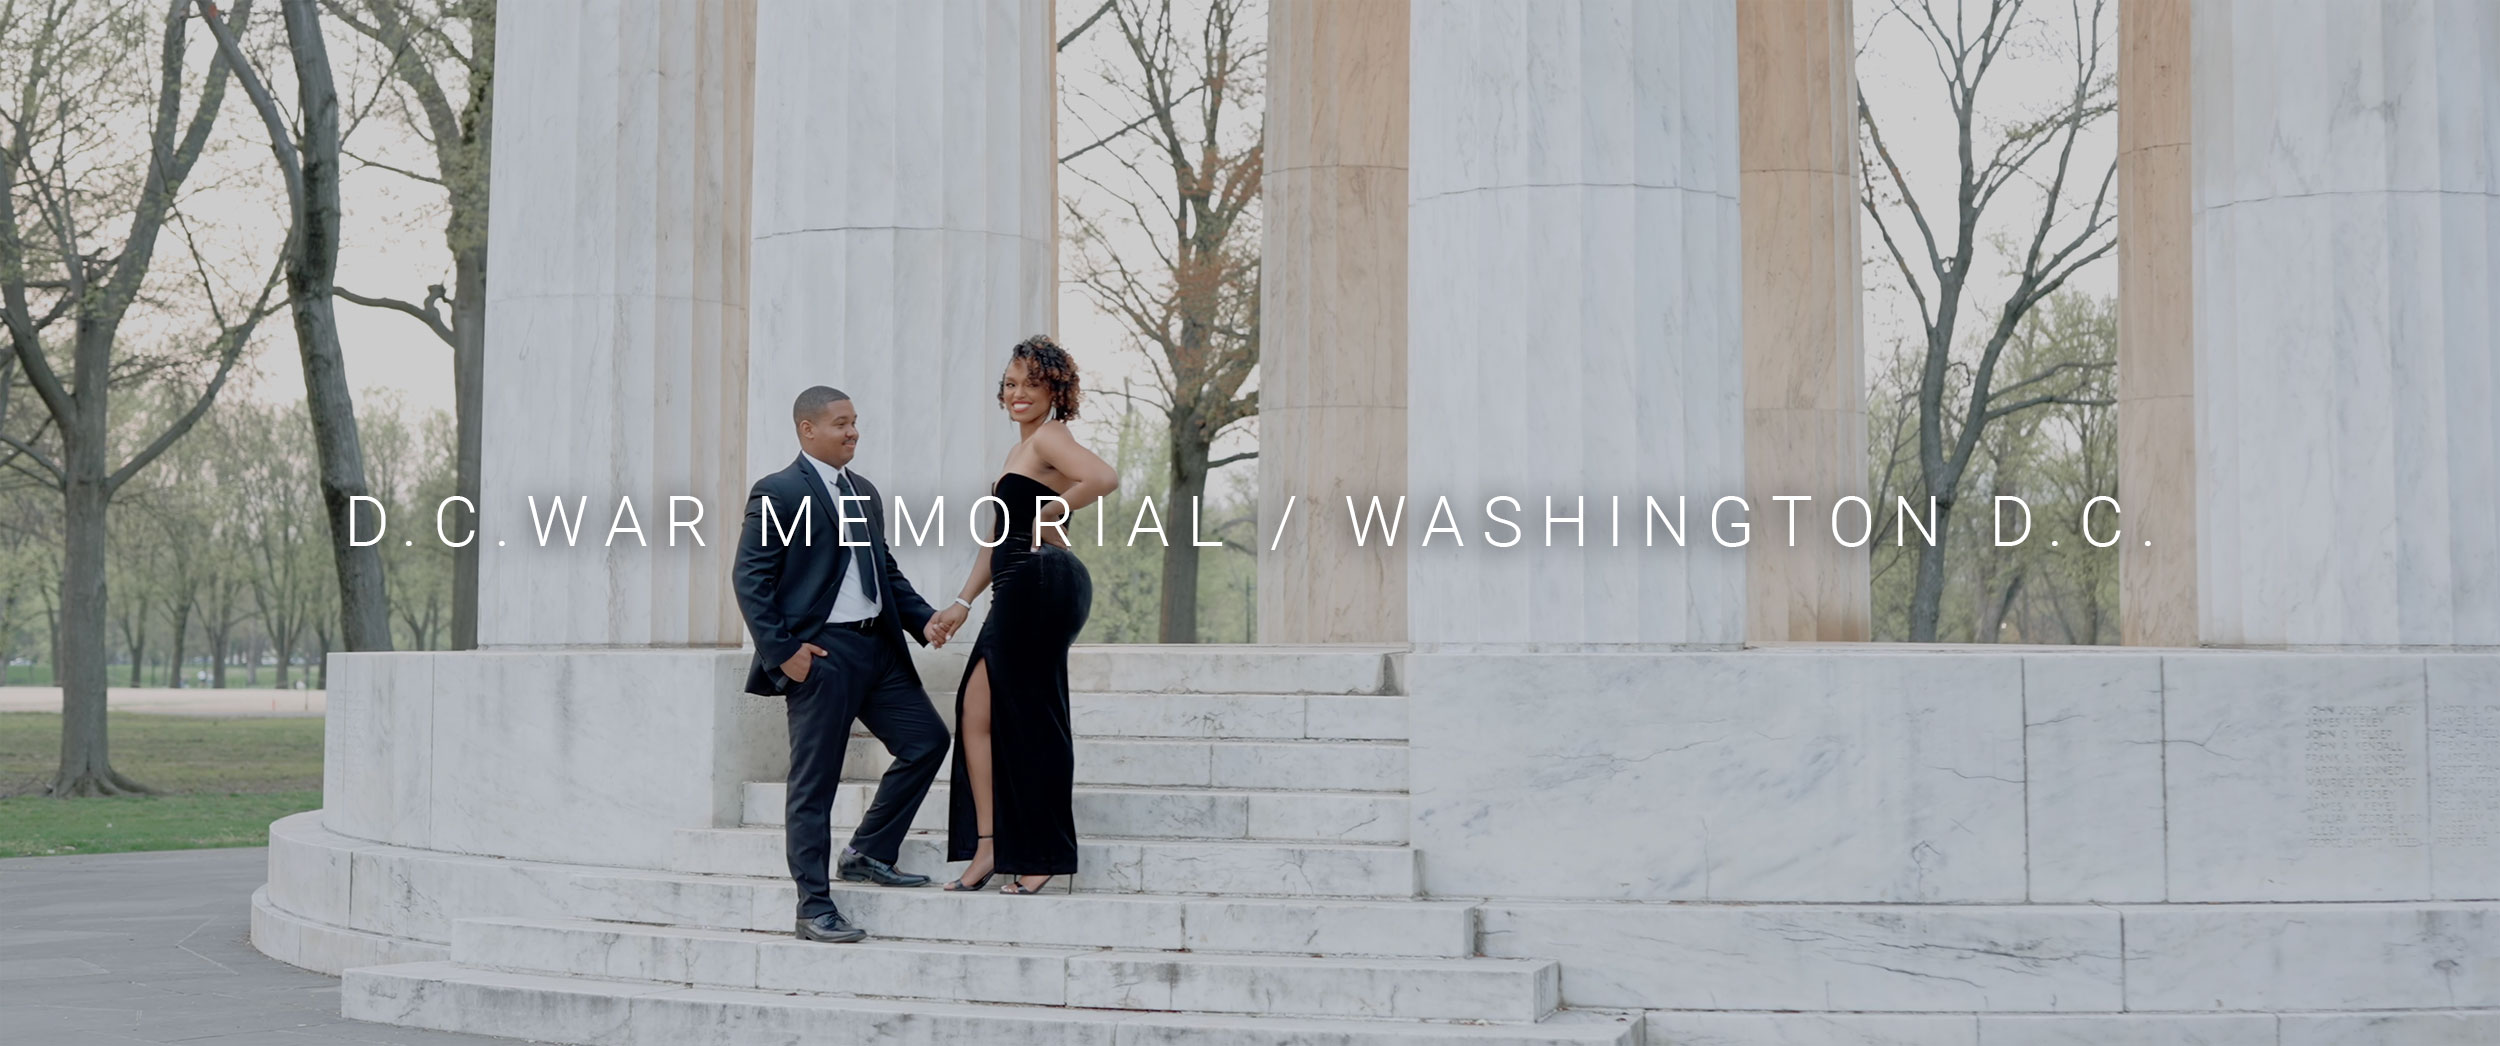 Vona B. Productions Washington, DC Videography at DC War Memorial